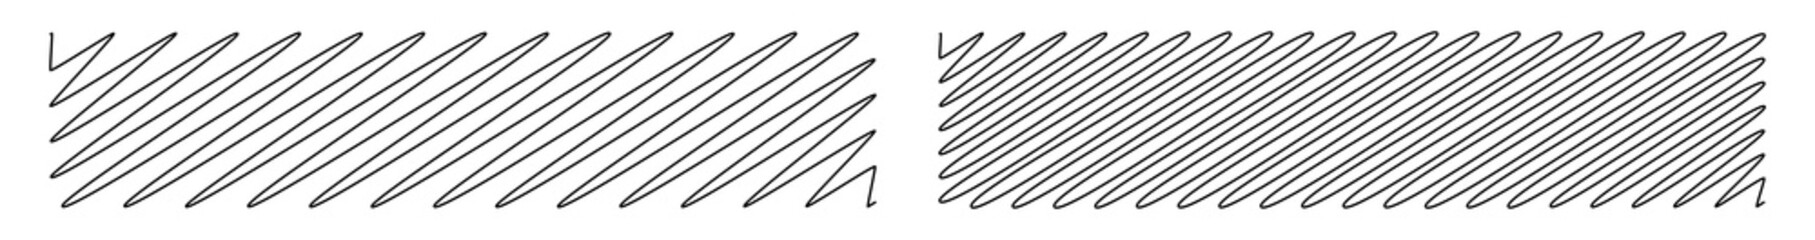 Squiggle, scrawl, curvy lines rectangular element vector illustration